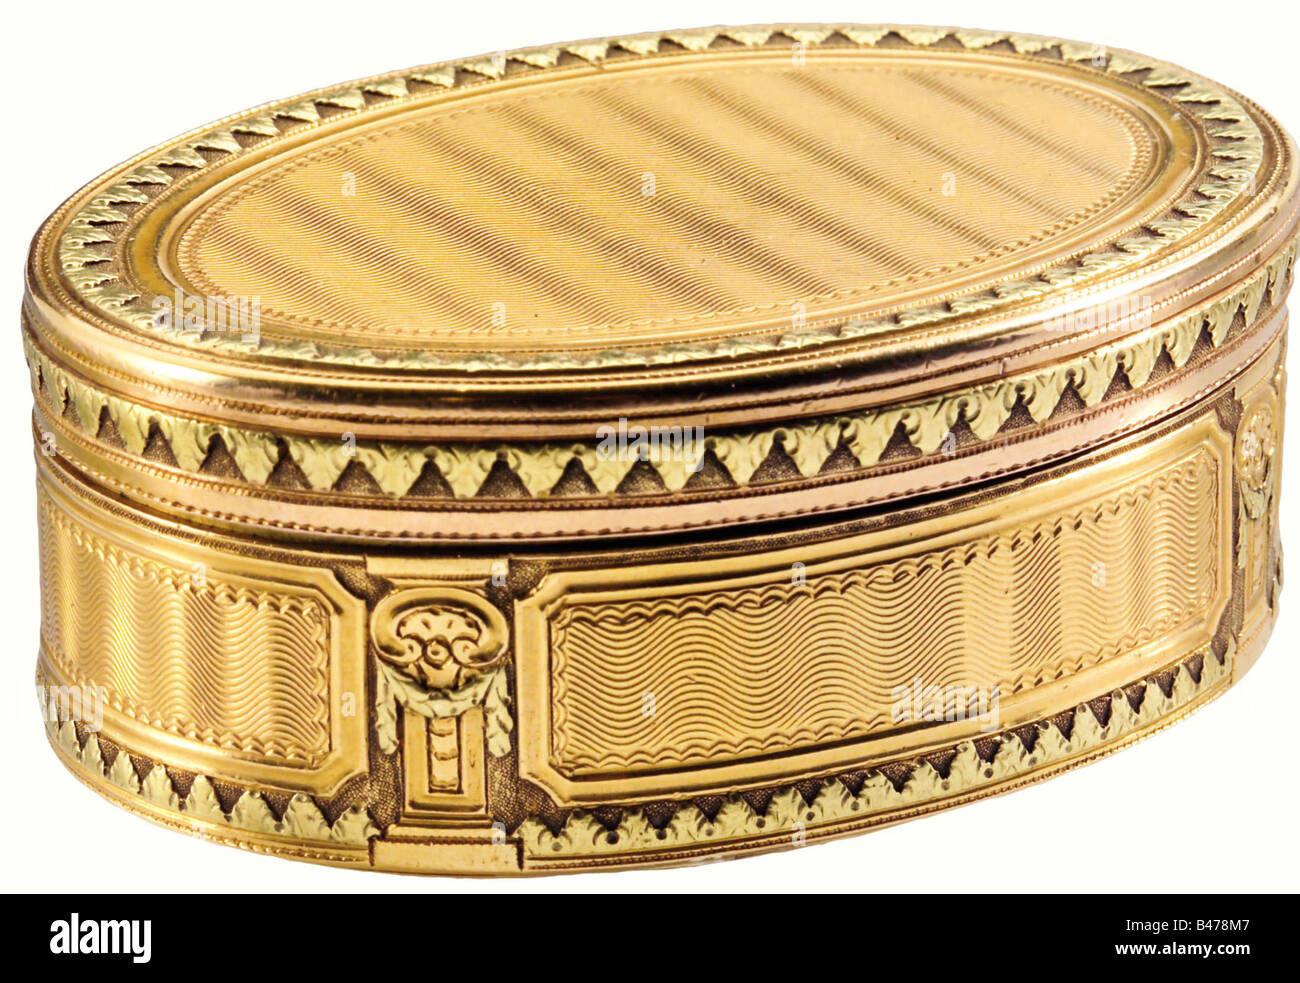 A Beautiful Three Colour Gold Oval Snuff Box